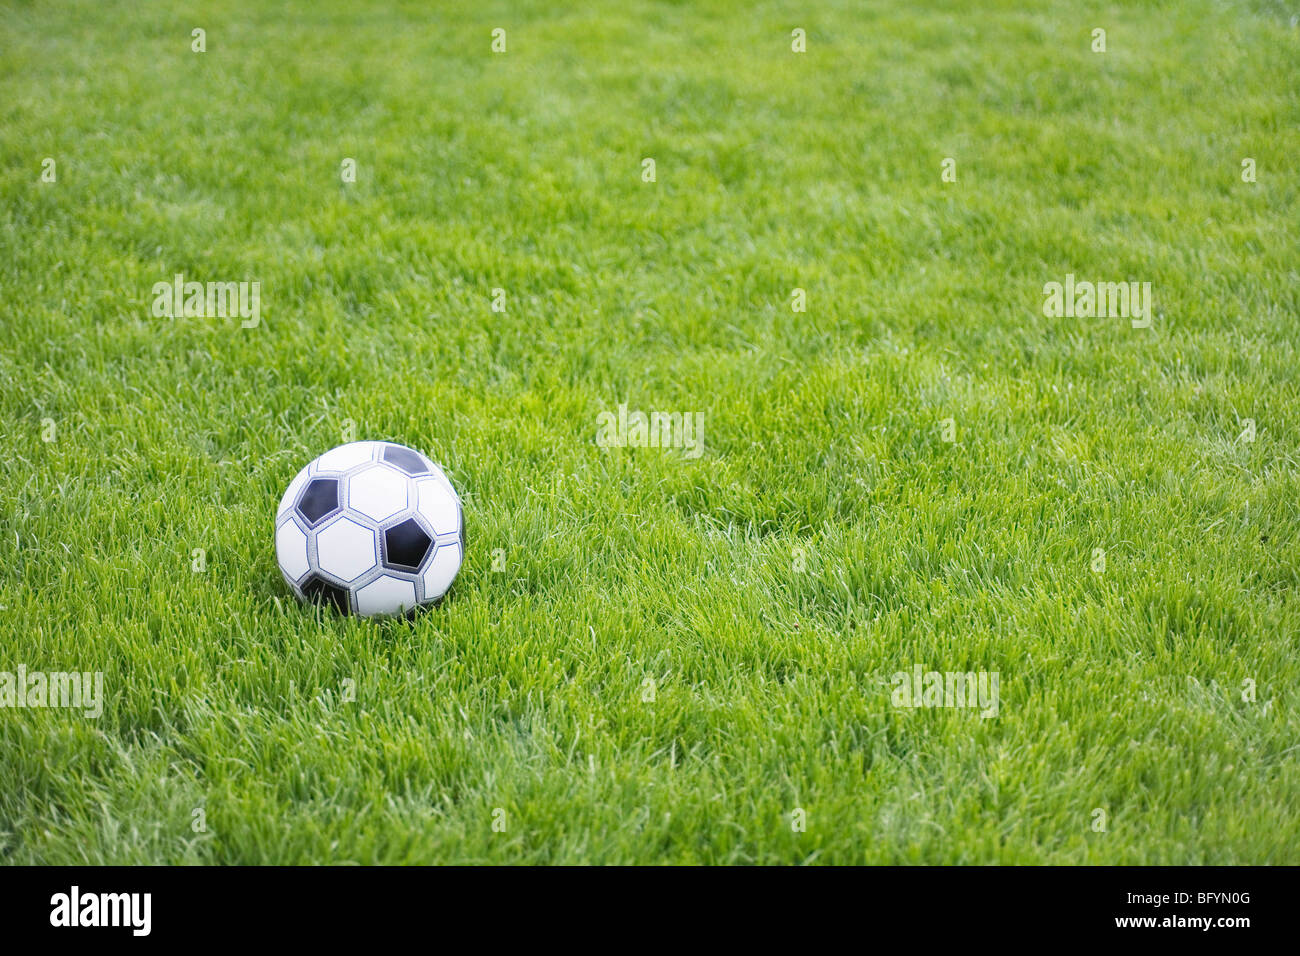 still life of football in grass Stock Photo